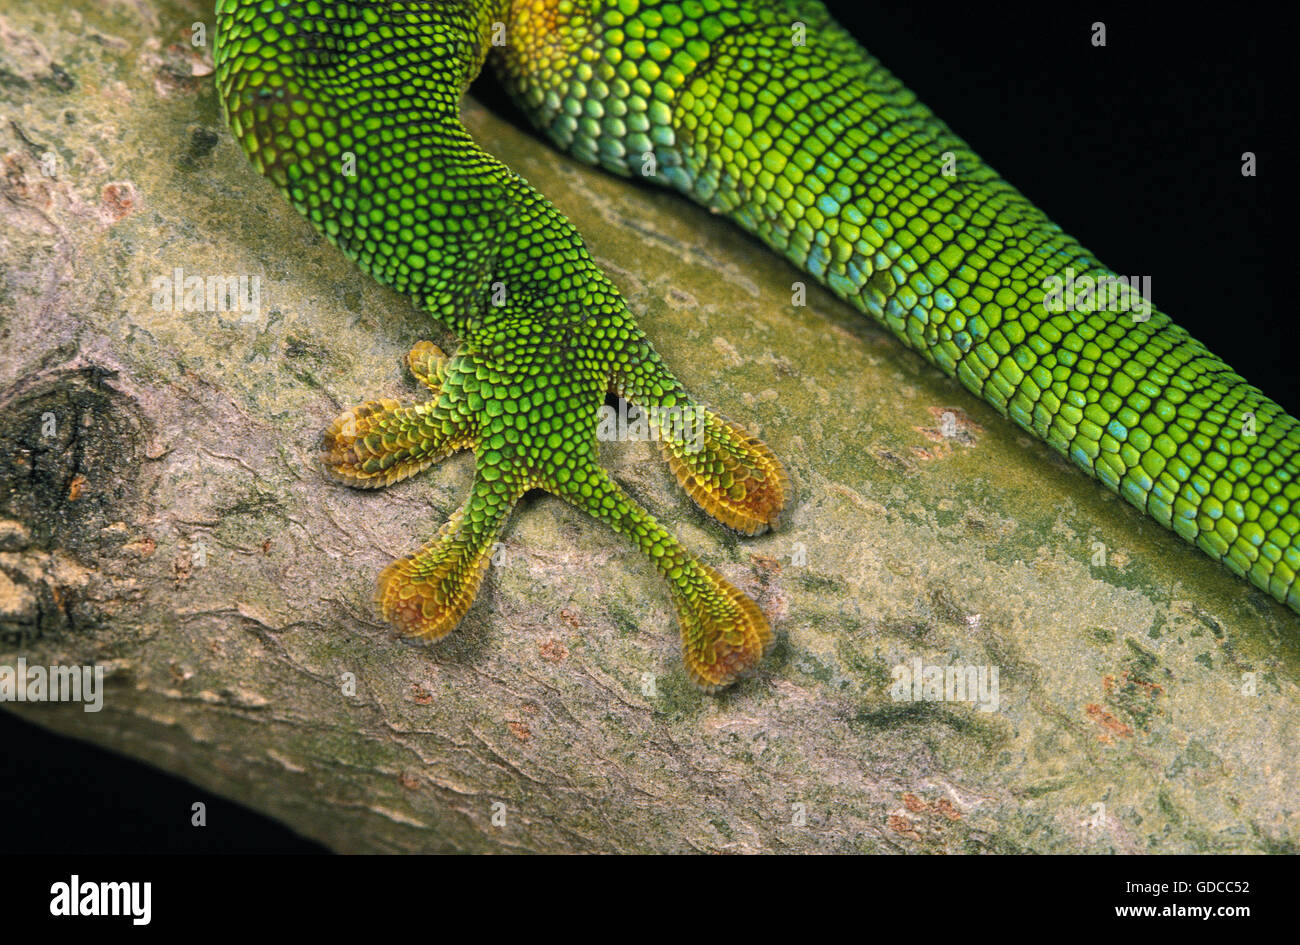 Madagaskar-Taggecko, Phelsuma Madagascariensis, Erwachsener, Nahaufnahme von Bein Stockfoto